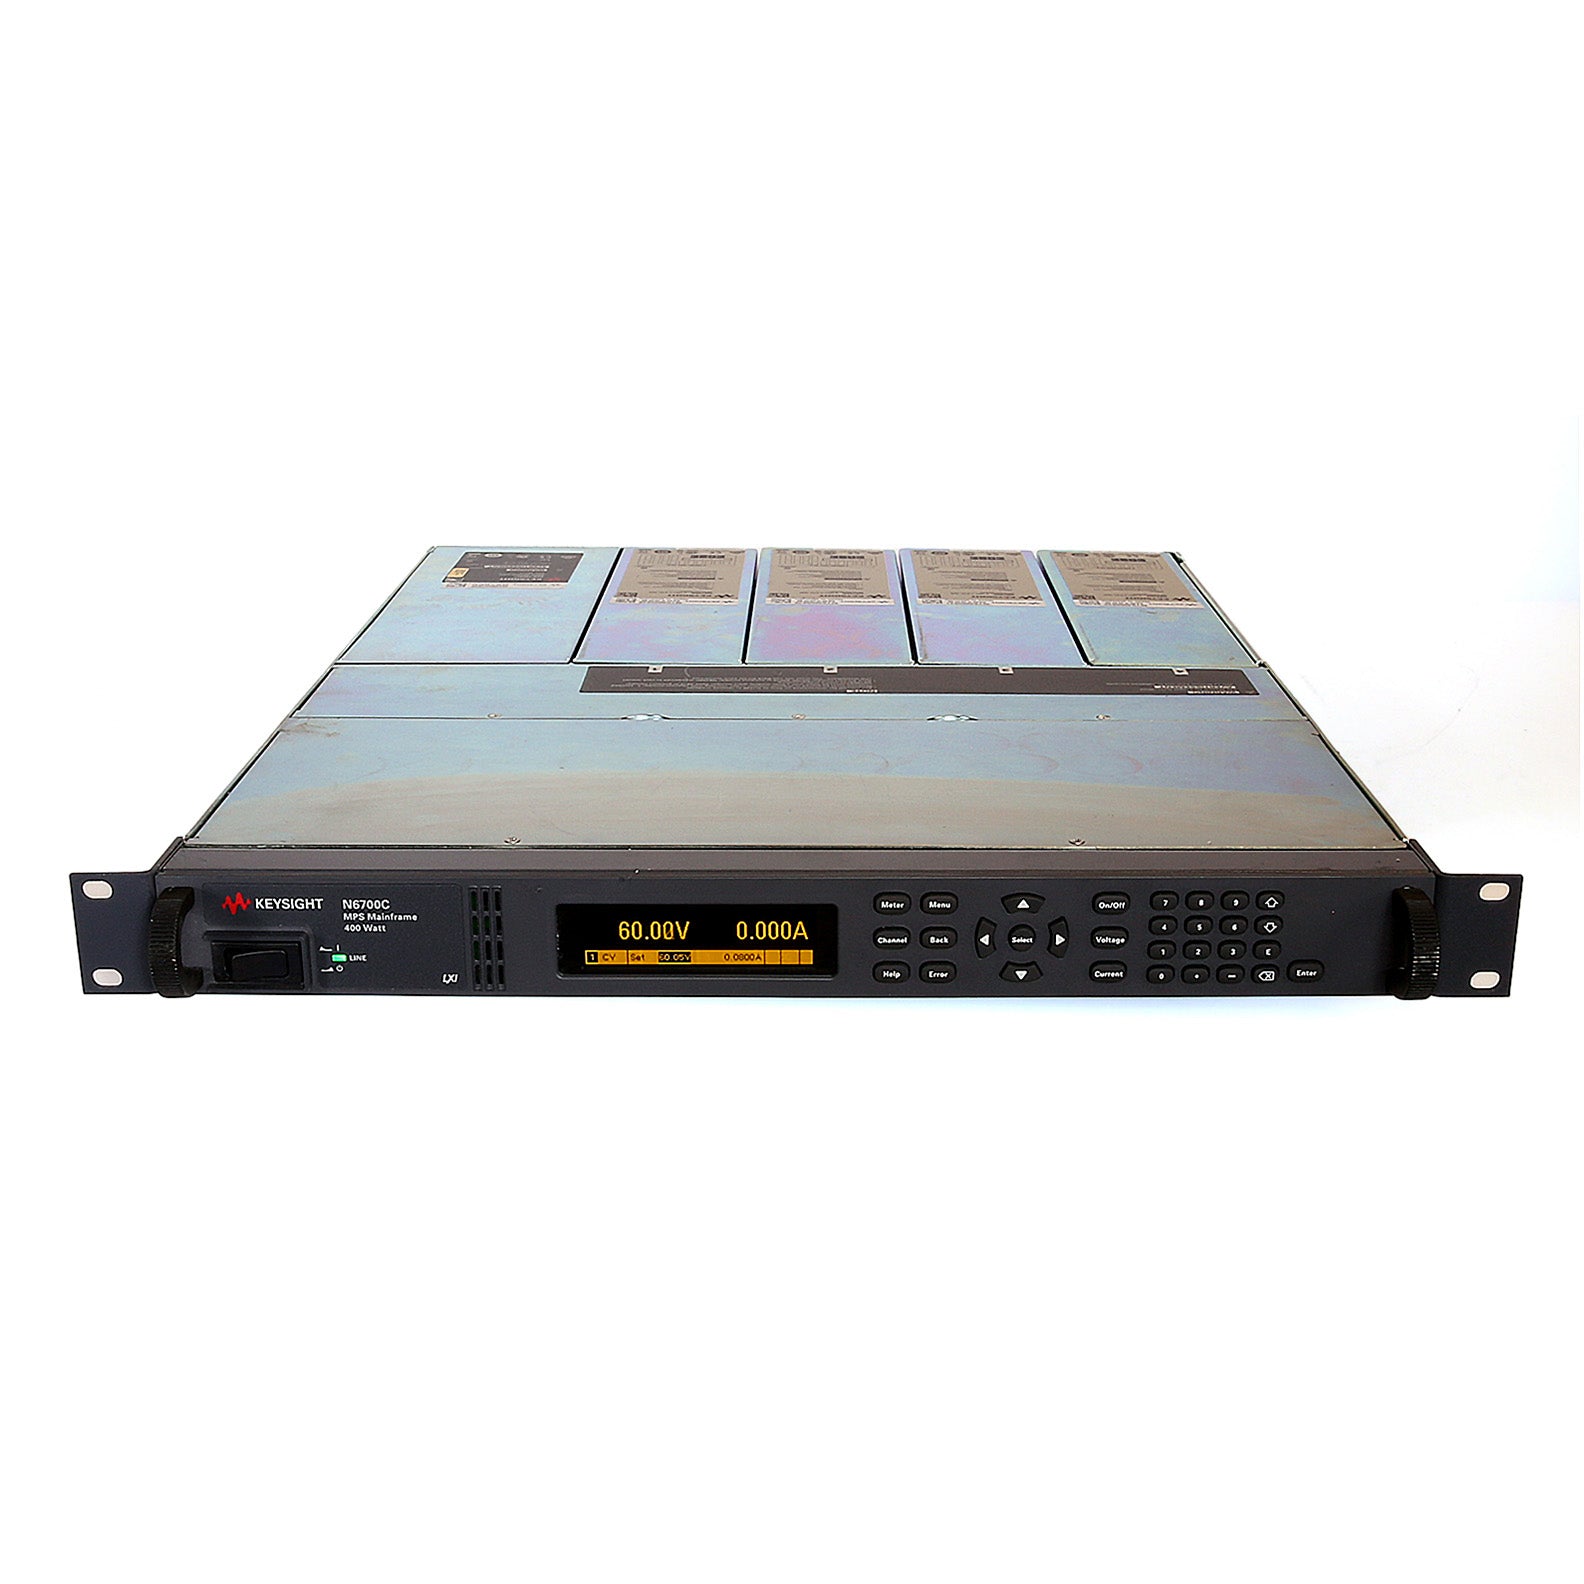 N6700 Series Modular System Power Supplies